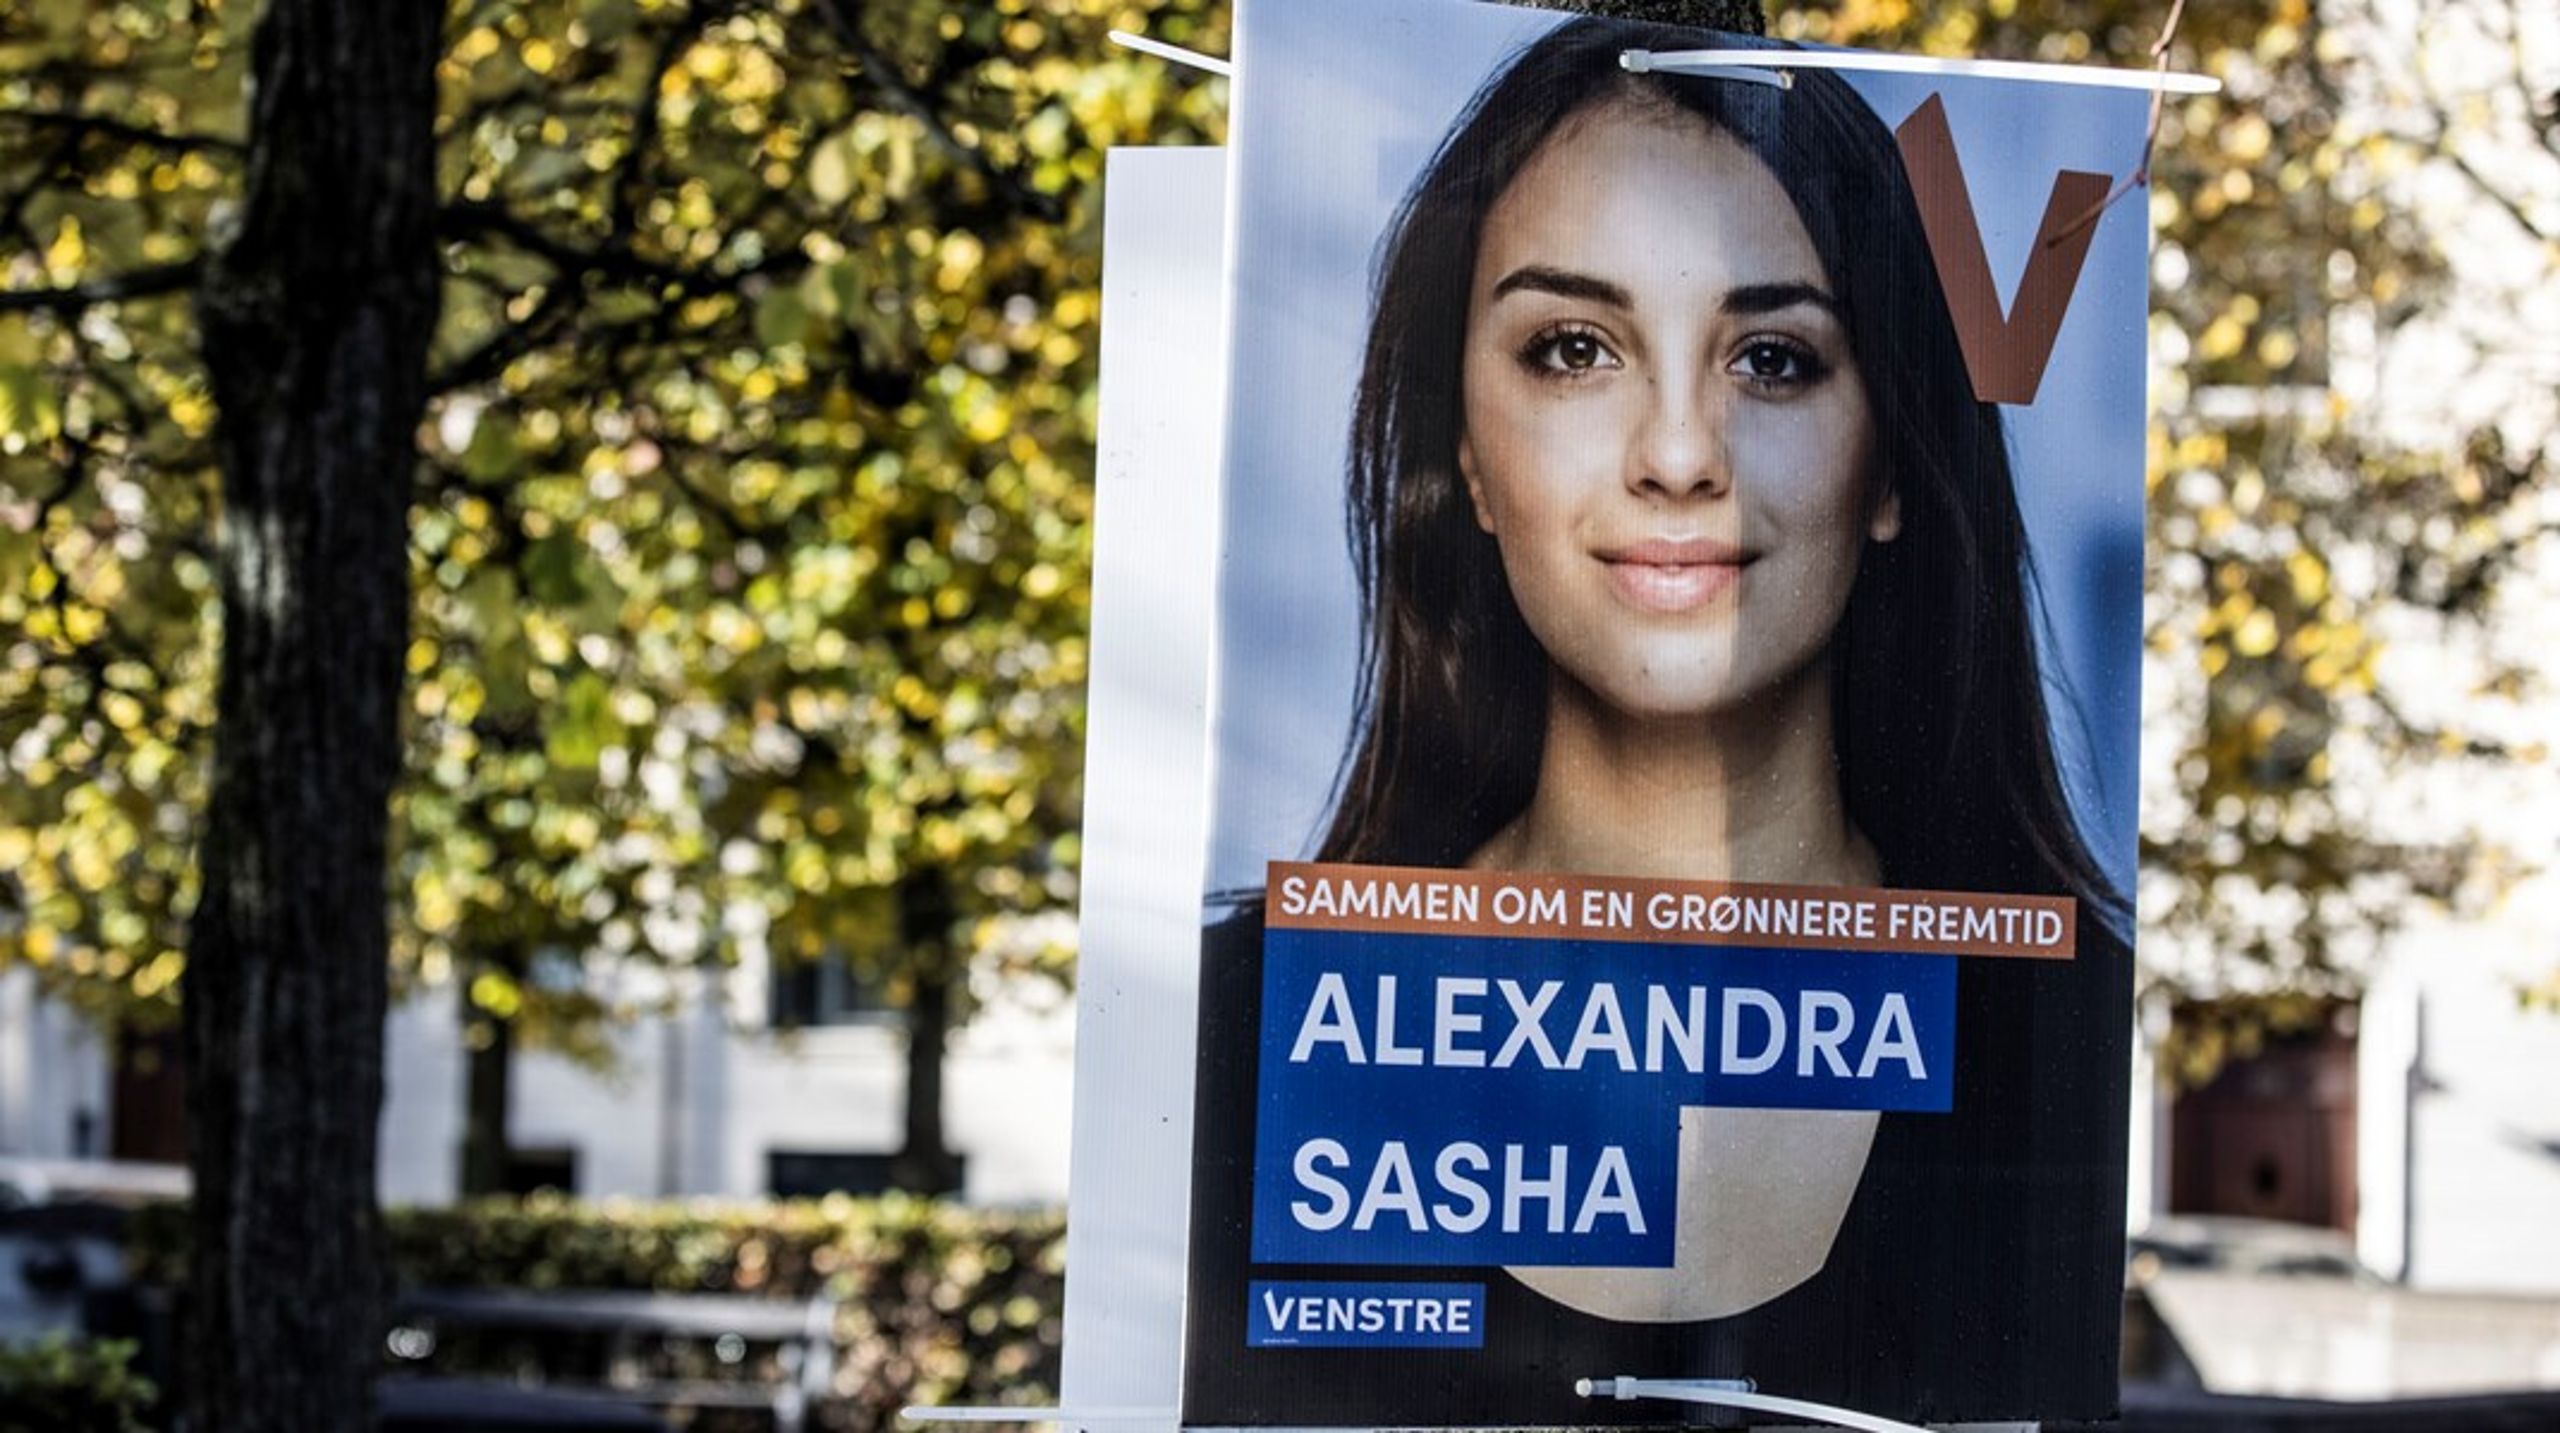 Alexandra Sasha har trukket sig som kandidat til Europa-Parlamentsvalget, hvor hun var nummer syv på listen for Venstre.